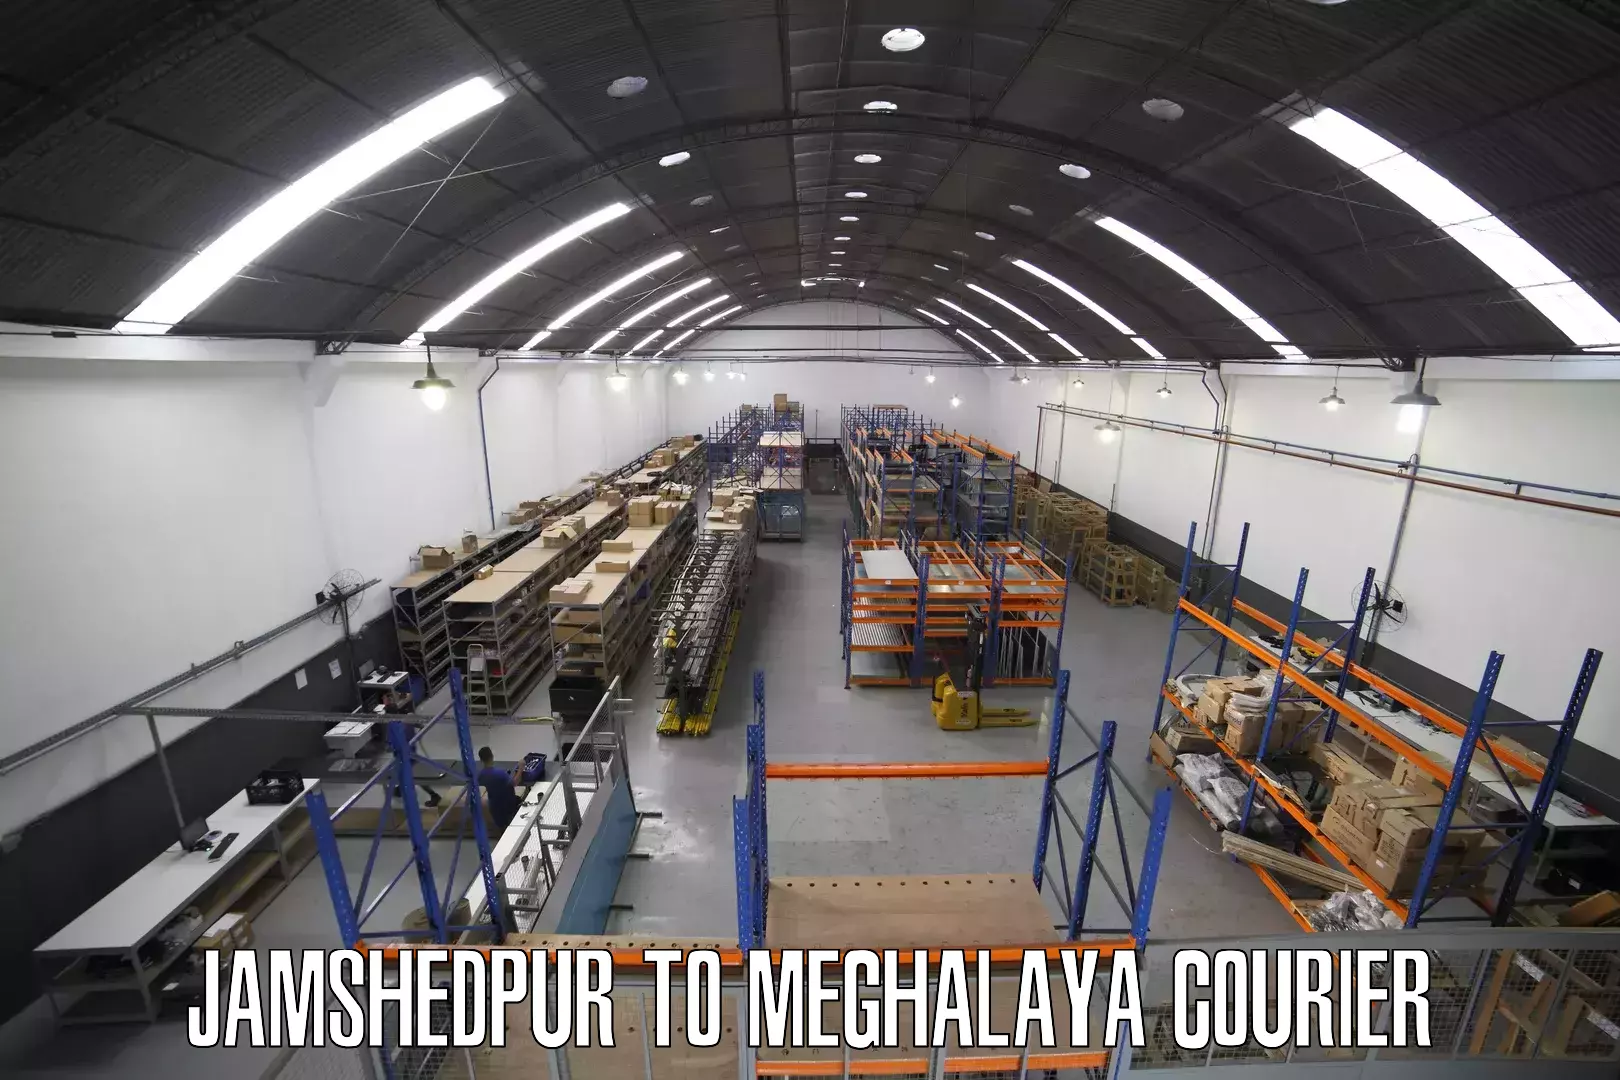 Package delivery network Jamshedpur to Meghalaya